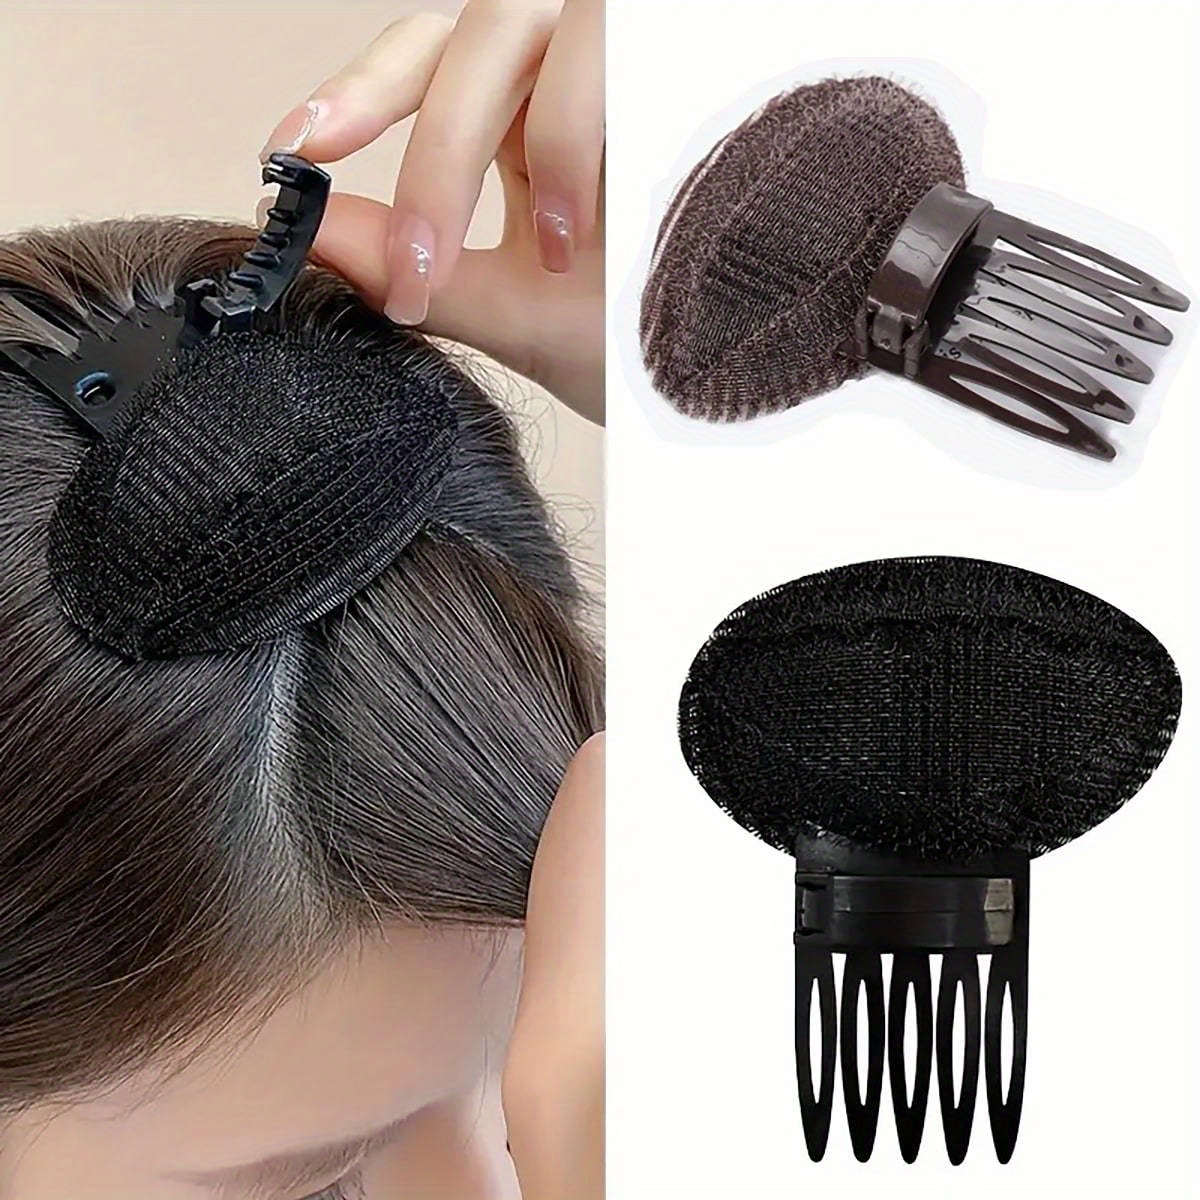 Bump It Up Volume Hair Base Set Sponge Styling Insert Braid Tool Hair Bump  Up Comb Clip Bun Hair Pad Accessories for Women Girls DIY Hairstyle (8)